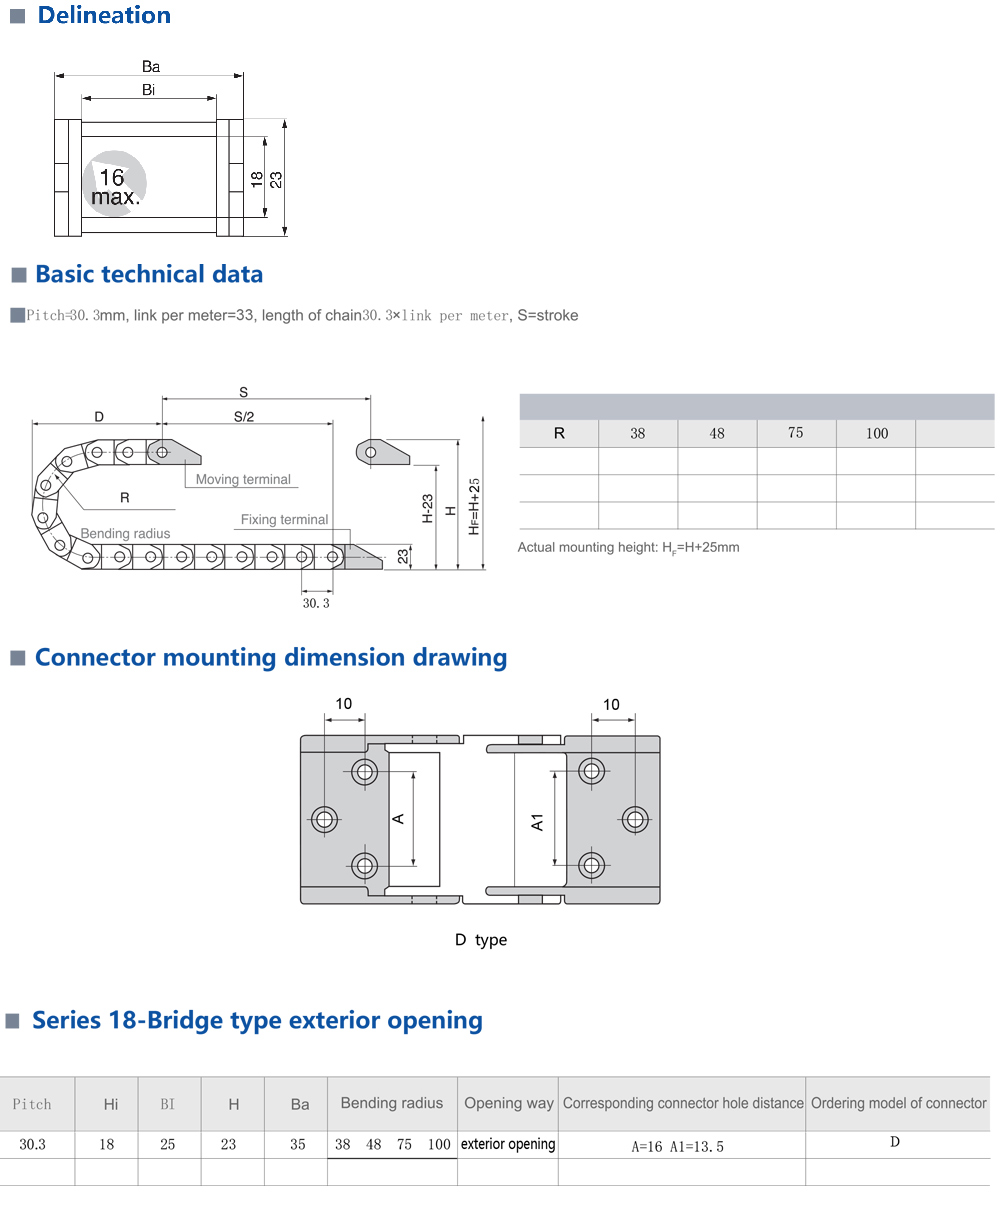 Series 18-Bridge type exterior opening